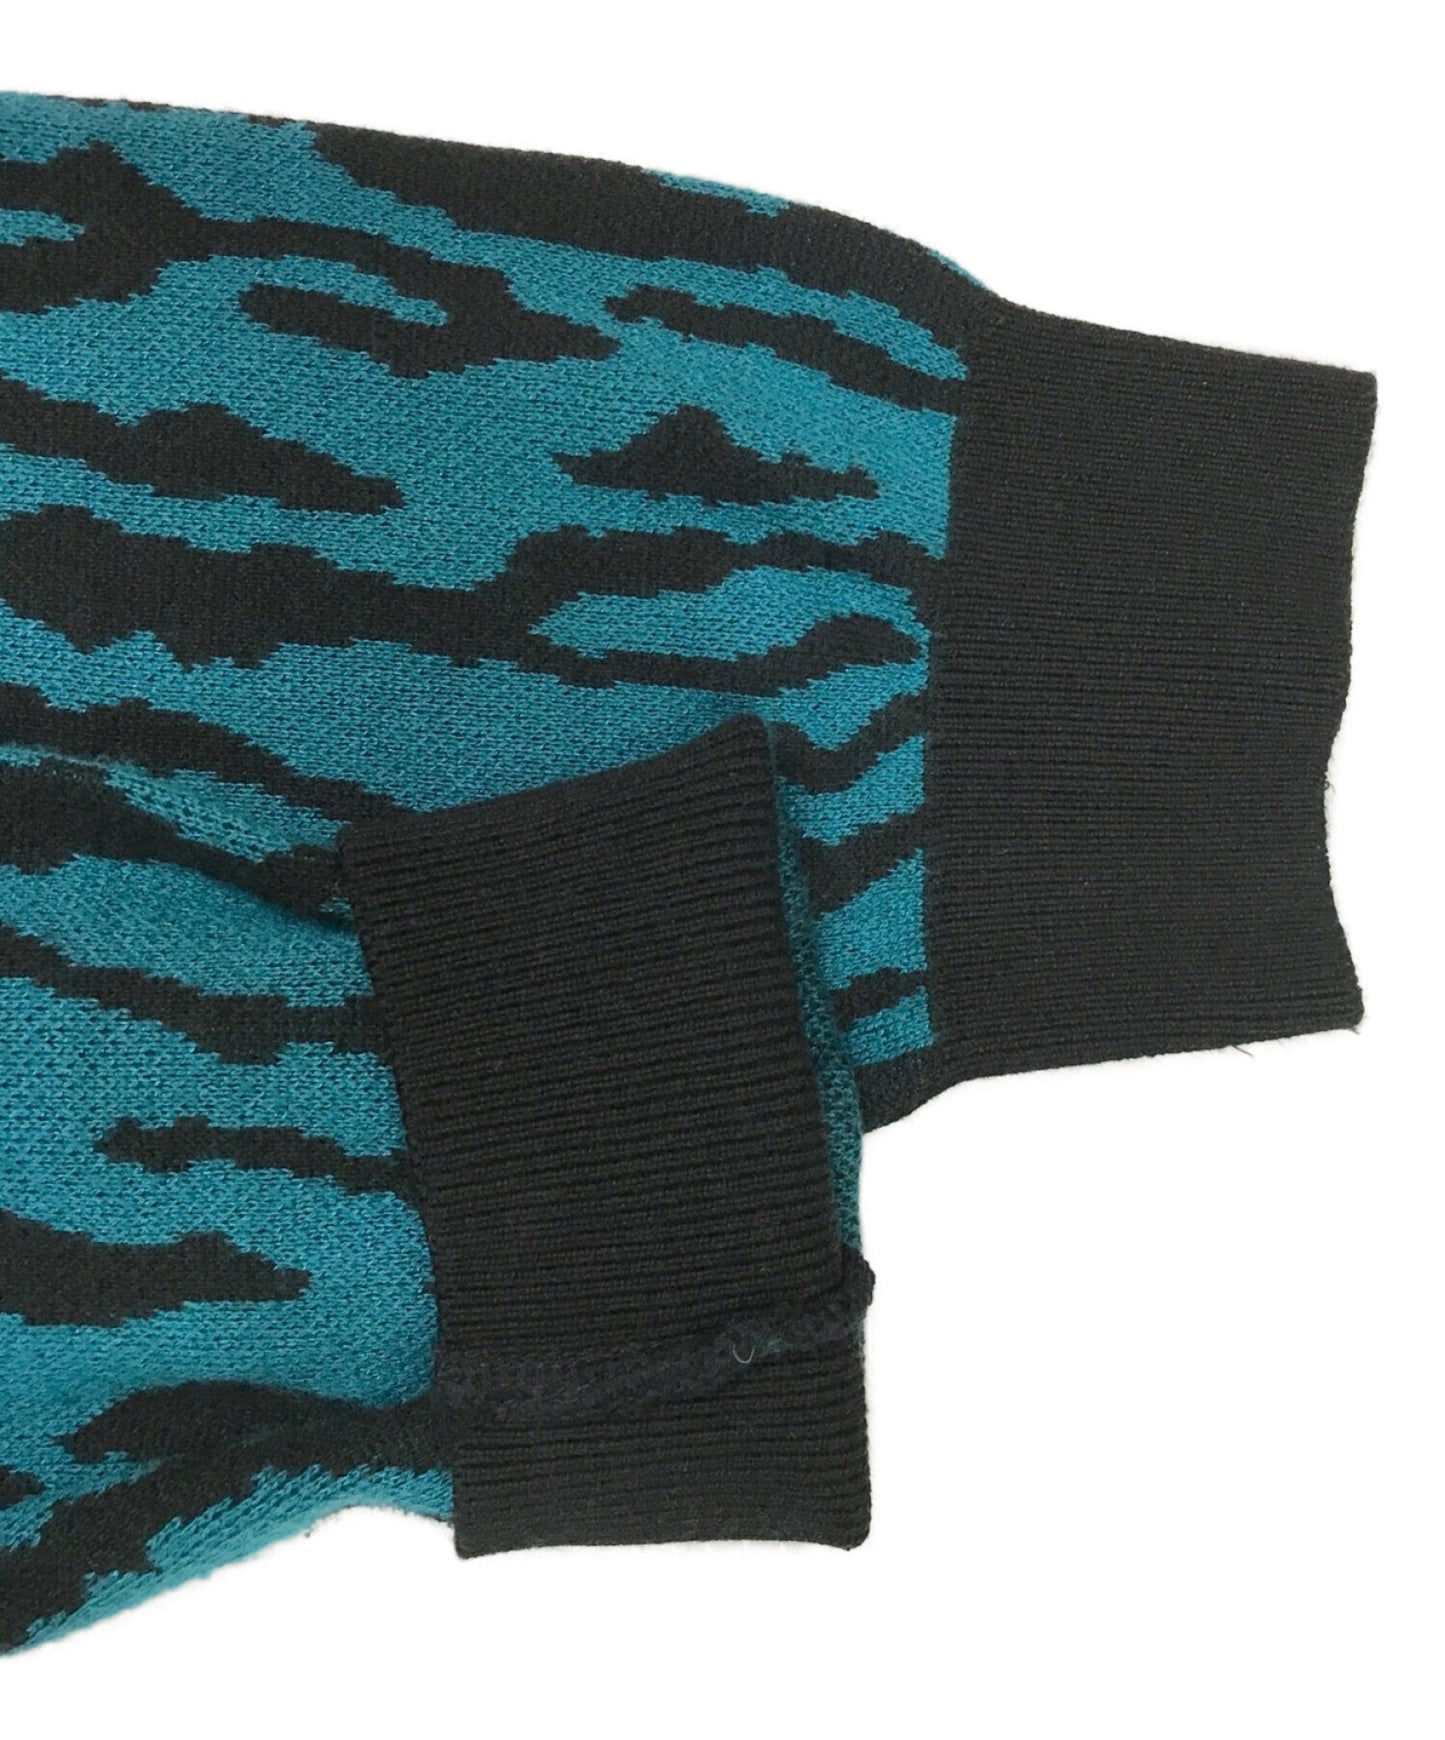 [Pre-owned] WACKO MARIA Leopard Knit Polo Shirt 22fw-wmk-kn21